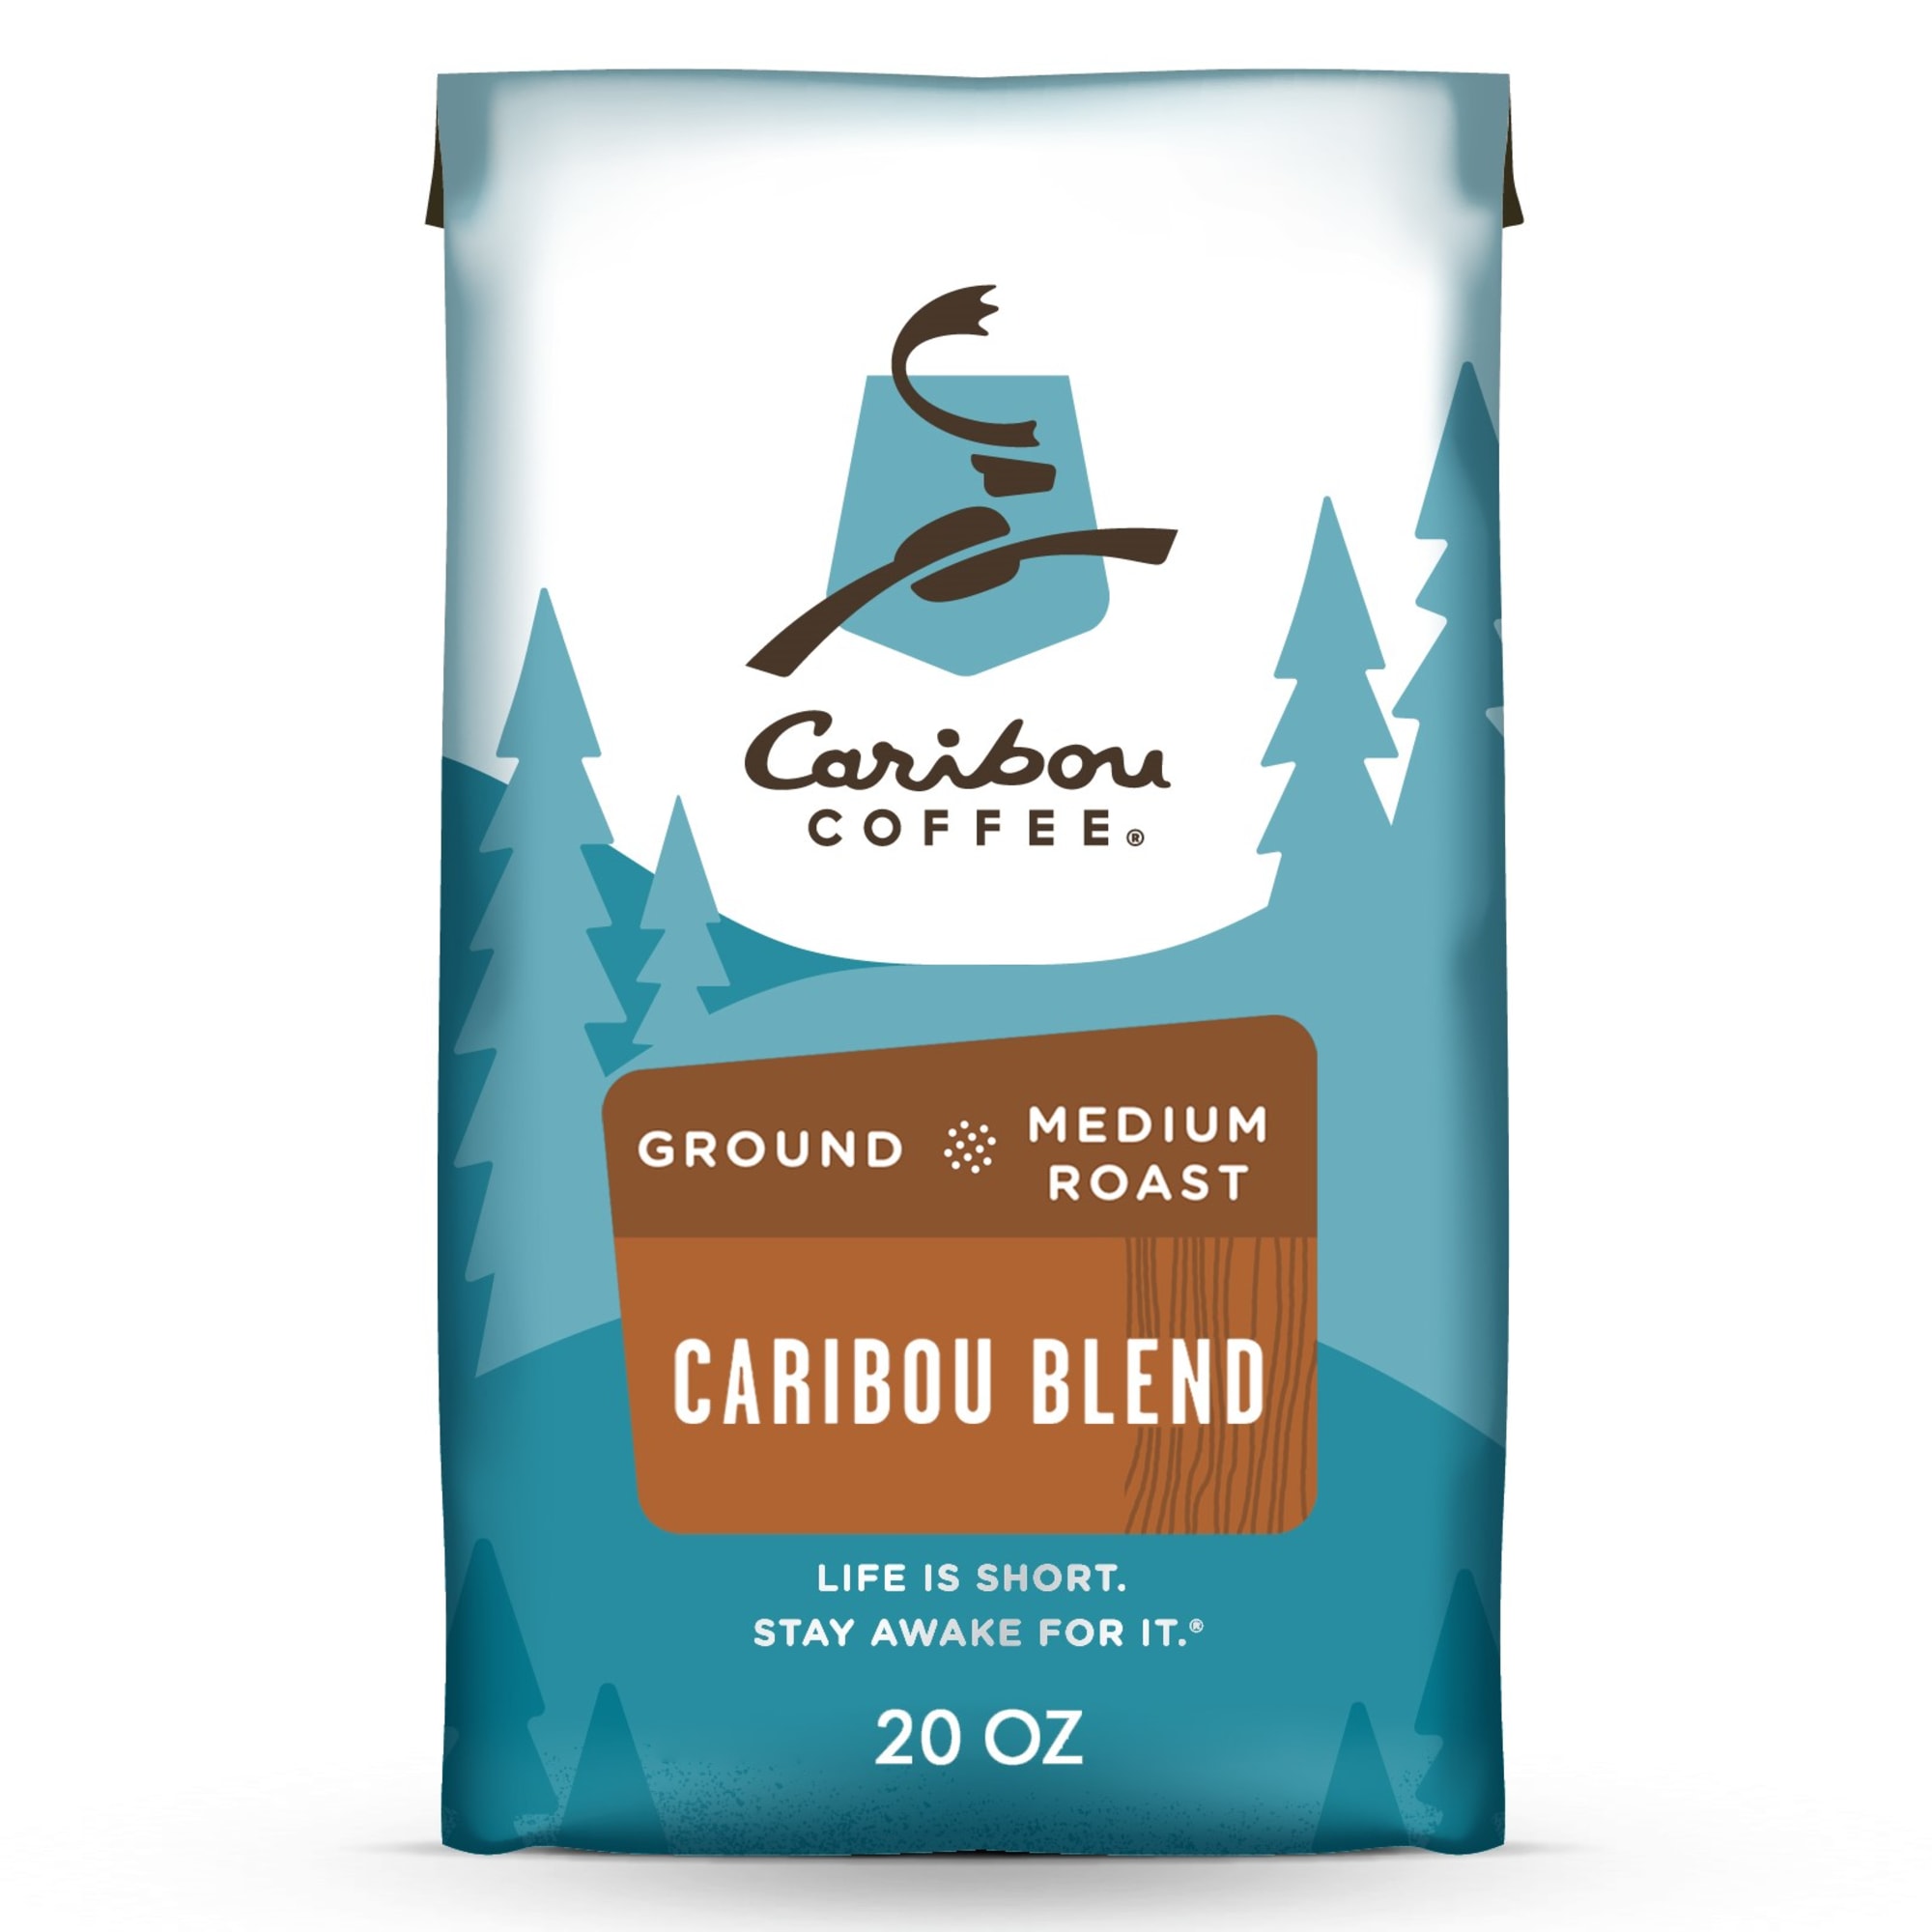 Caribou Coffee Caribou Blend Ground Coffee, Premium Medium Roast, 100% Arabica, 20 oz - image 1 of 6